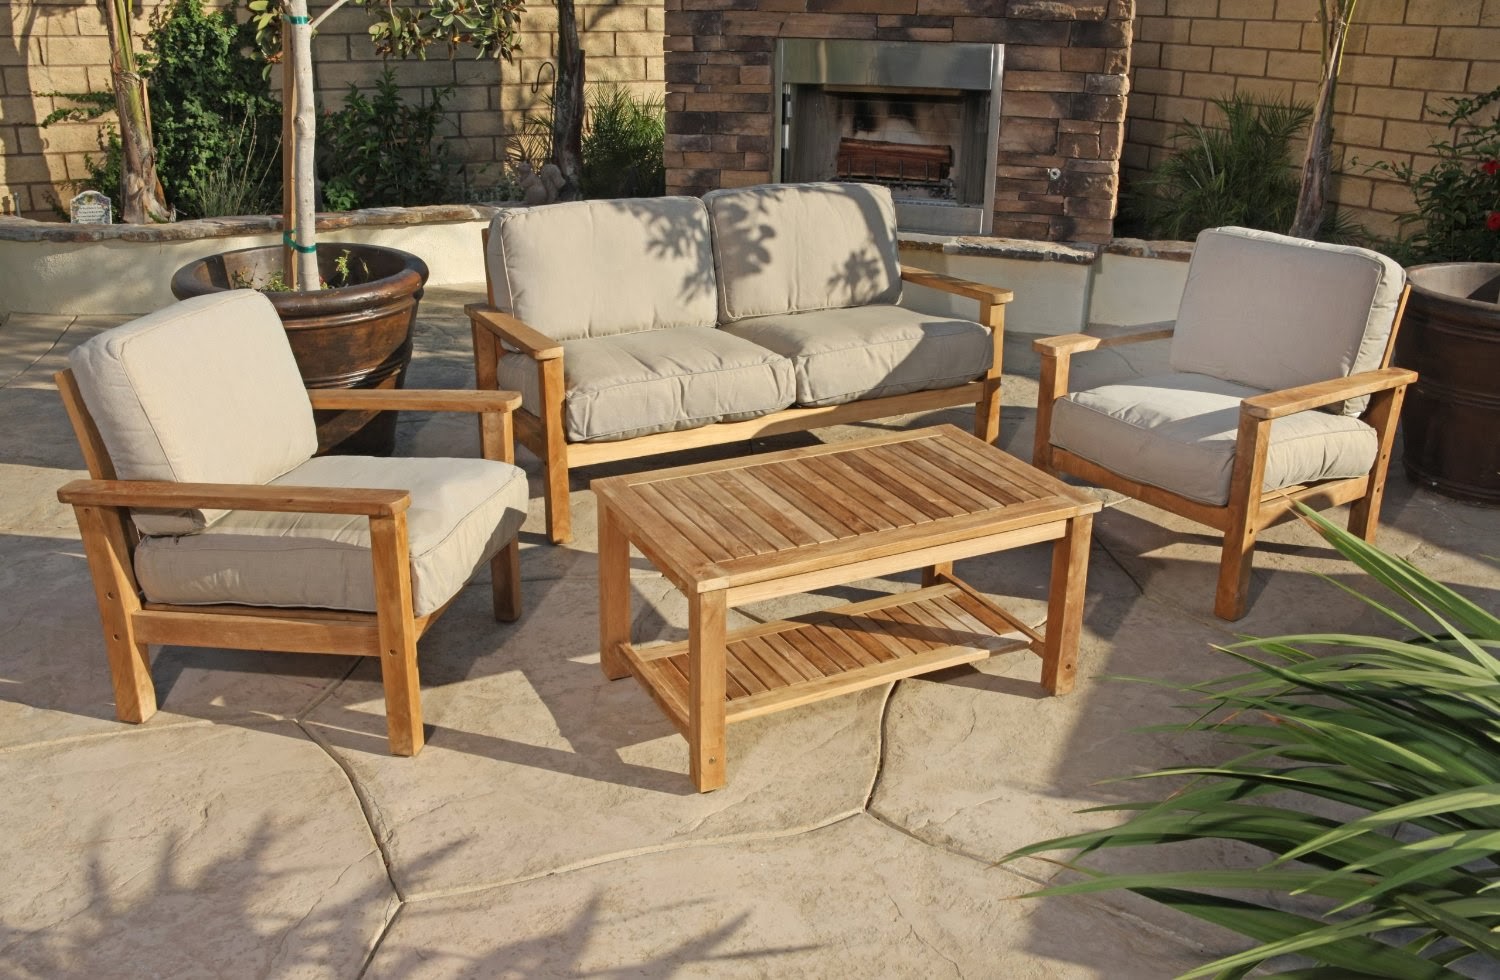 Wooden garden furniture Teak garden furniture with an upholstered couch KTOWCOU